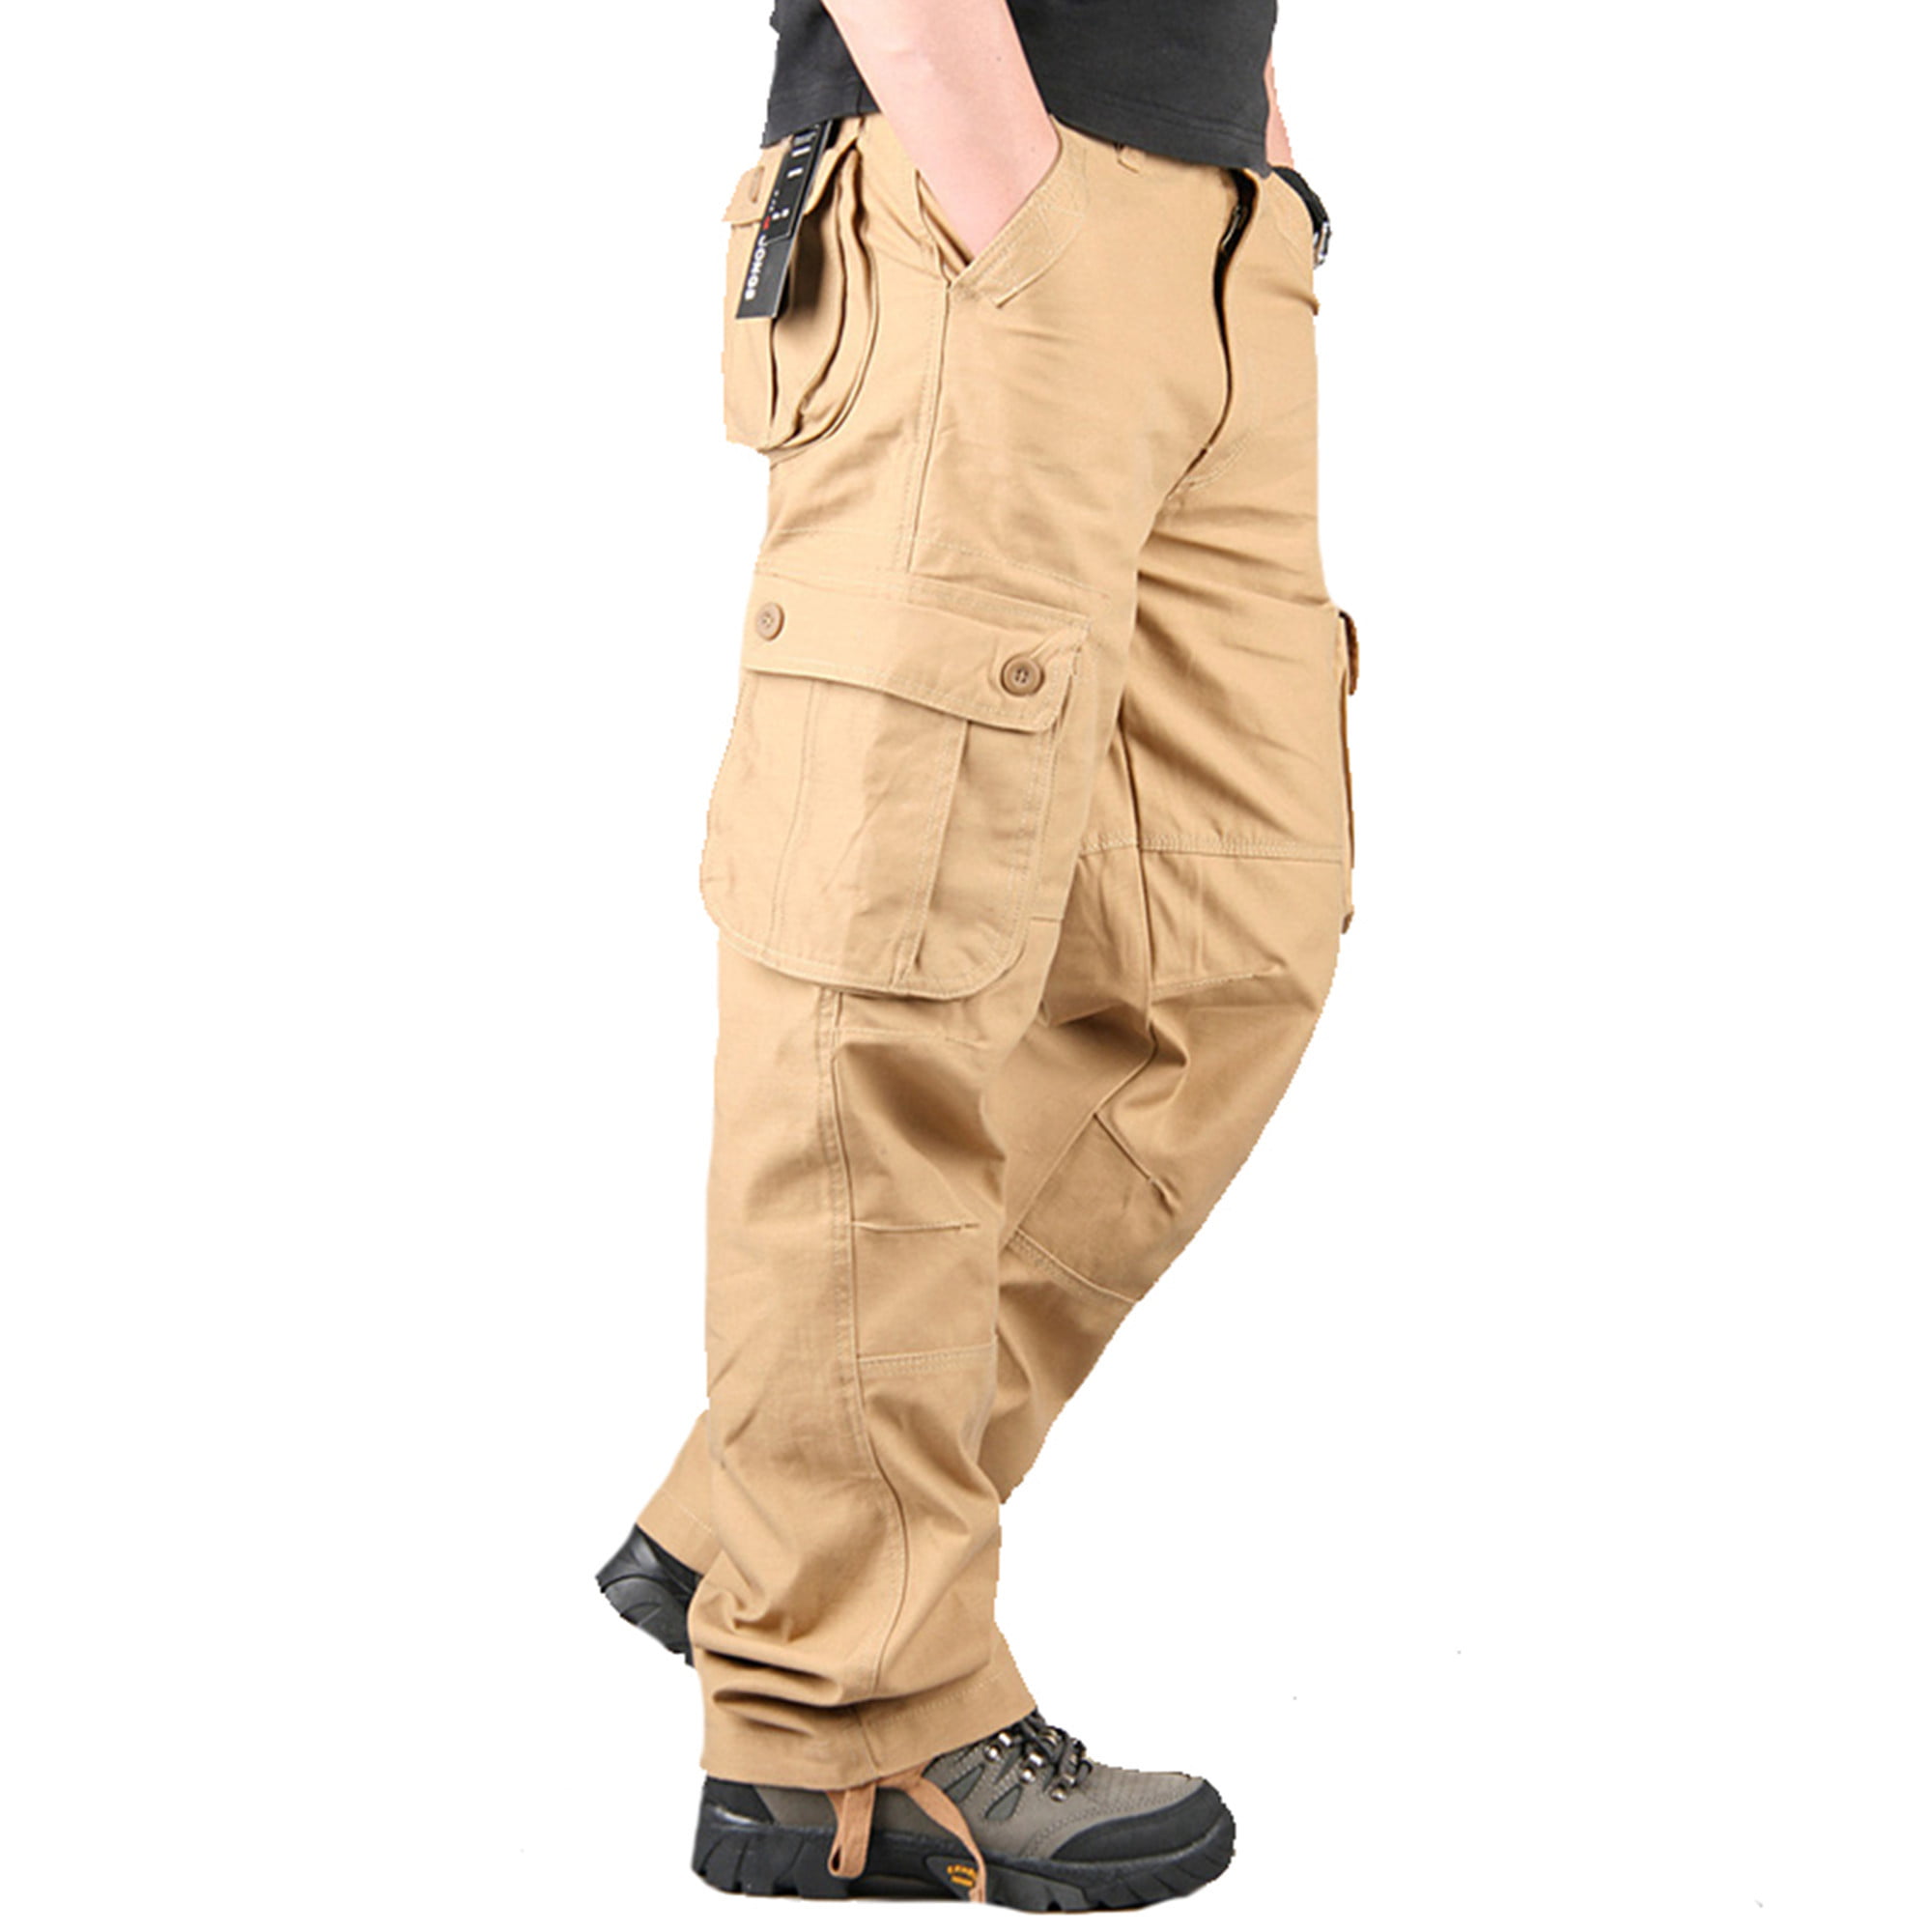 Details about   Men's Multi-Pocket Loose Casual Slacks Overalls Pants with Adjustable Drawstring 